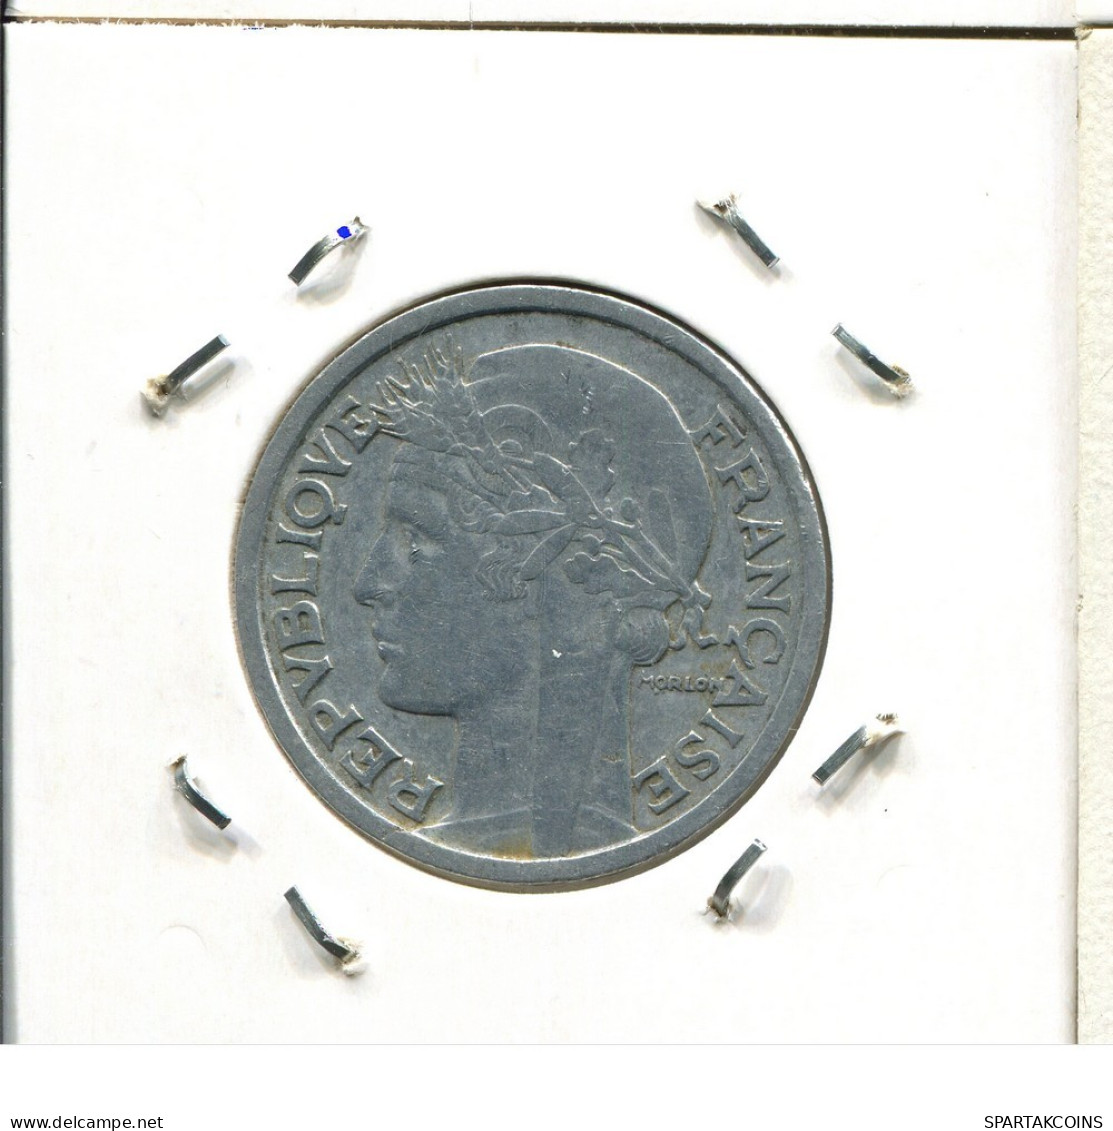 2 FRANCS 1947 FRANCE French Coin #BA788.U.A - 2 Francs